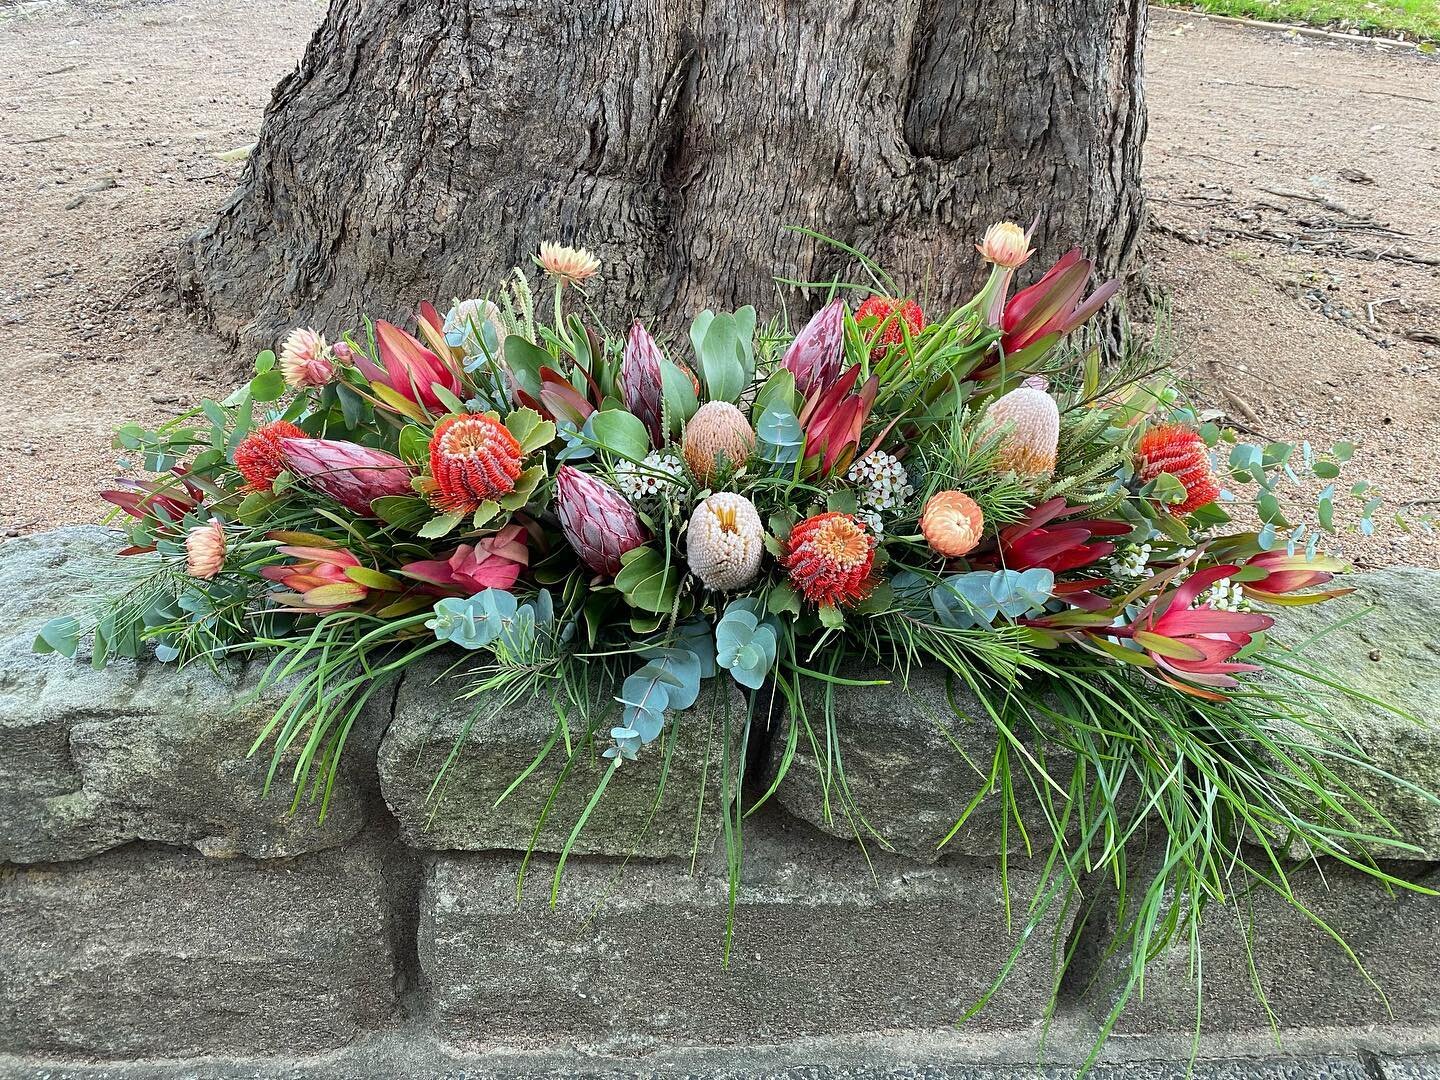 I absolutely love the barker bush cascading down from this arrangement 👌🏼
.
.
.
.
#flower #flowers #flowersofinstagram #freshflowers #funeral #sympathy